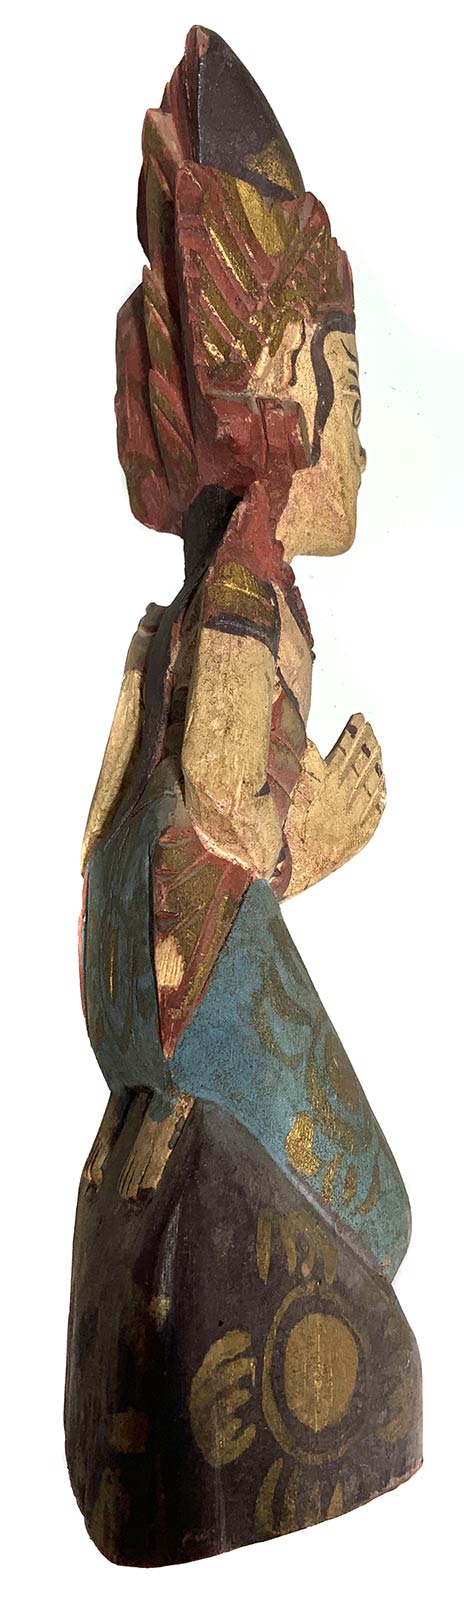 Bali Indonesian Origin. Statuette in colored wood. Woman in prayer. H Cm 26 - Image 2 of 3